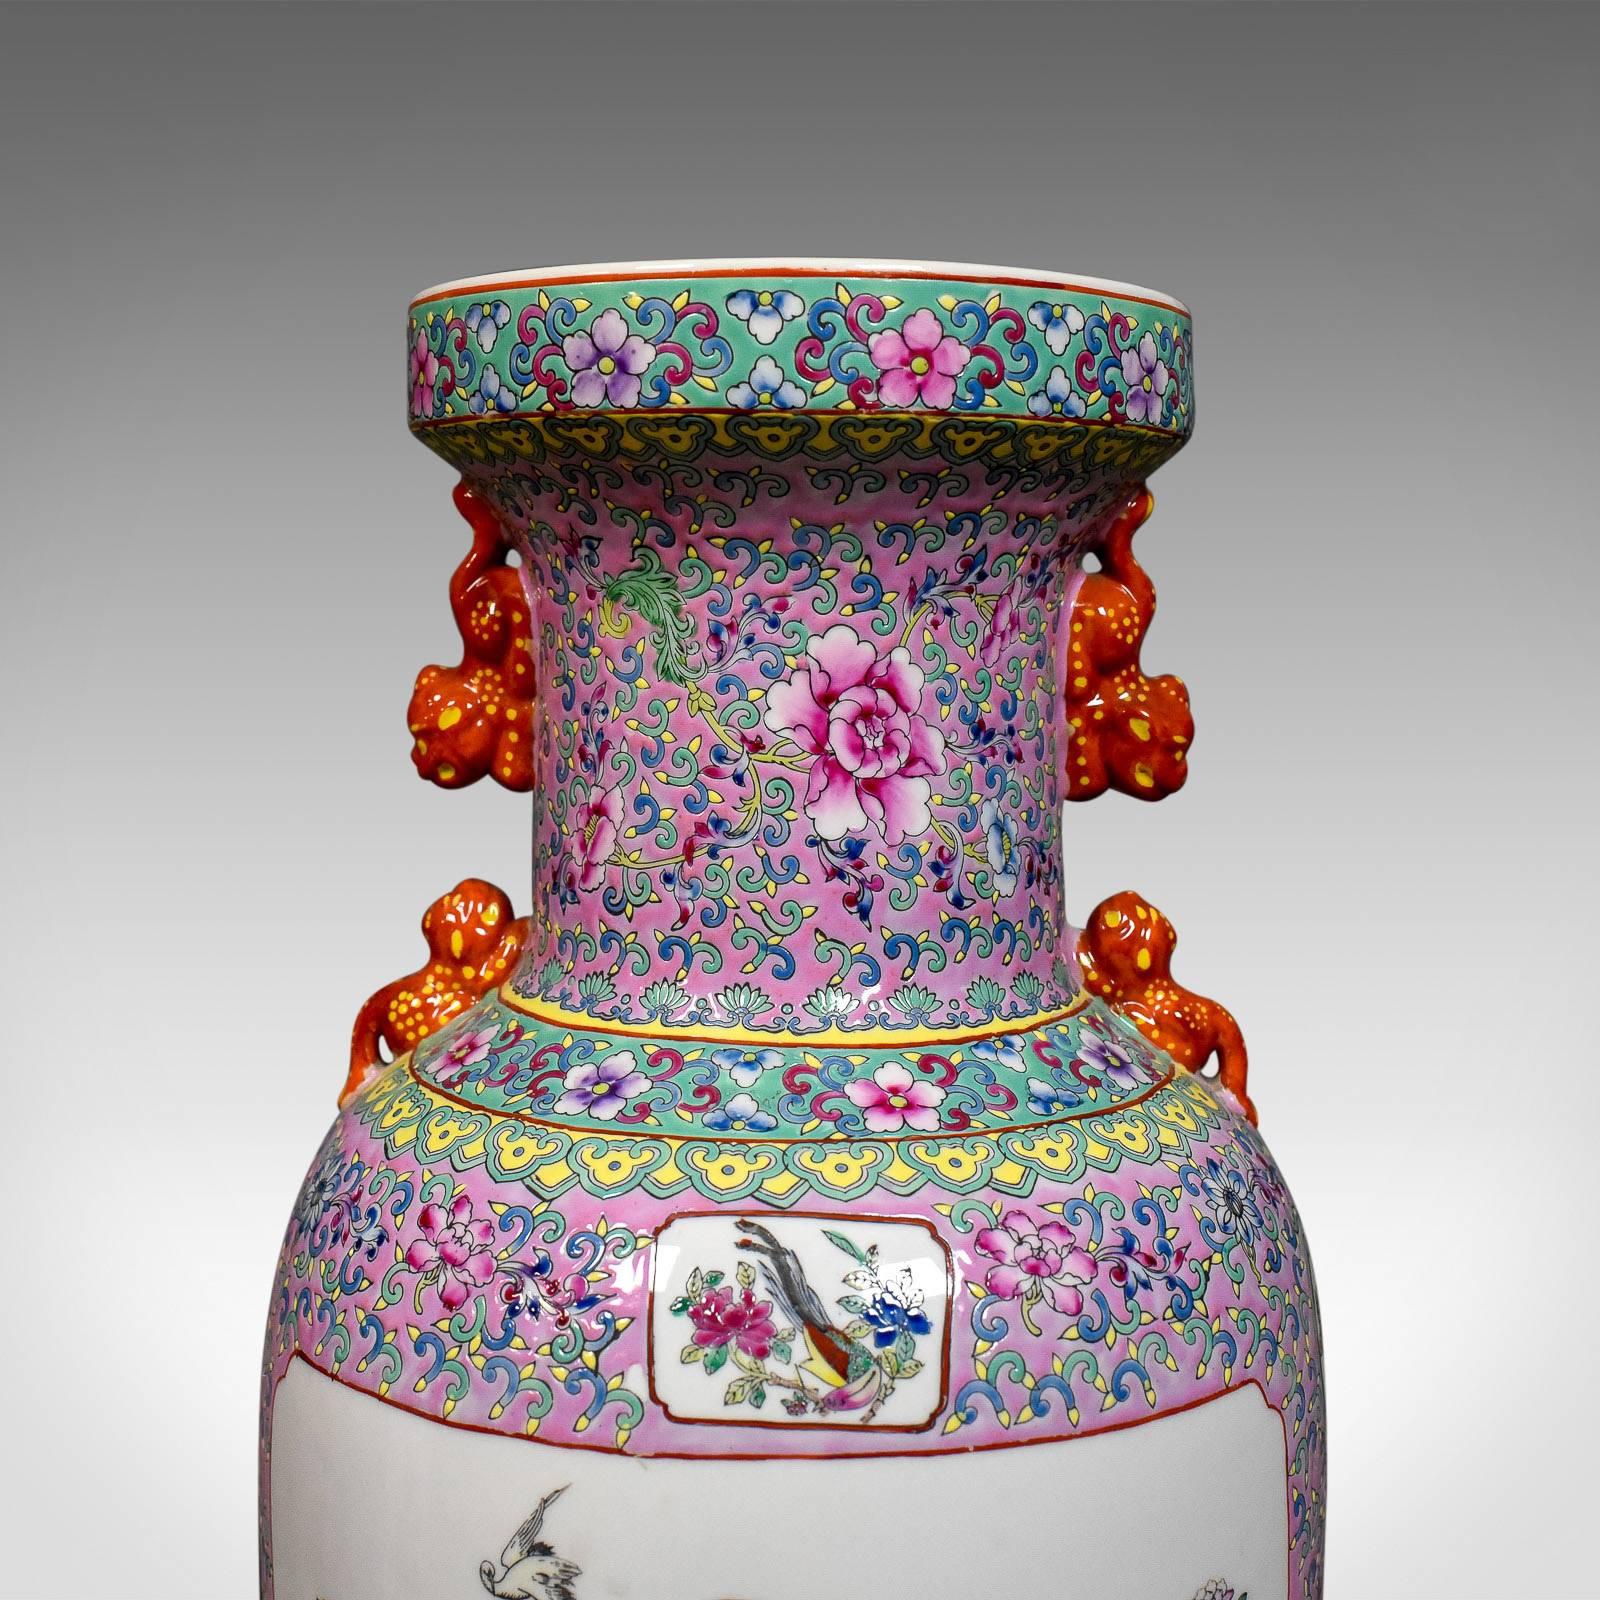 Chinese Export Midcentury Pair of Chinese Baluster Vases, Hand-Painted Ceramic Urns